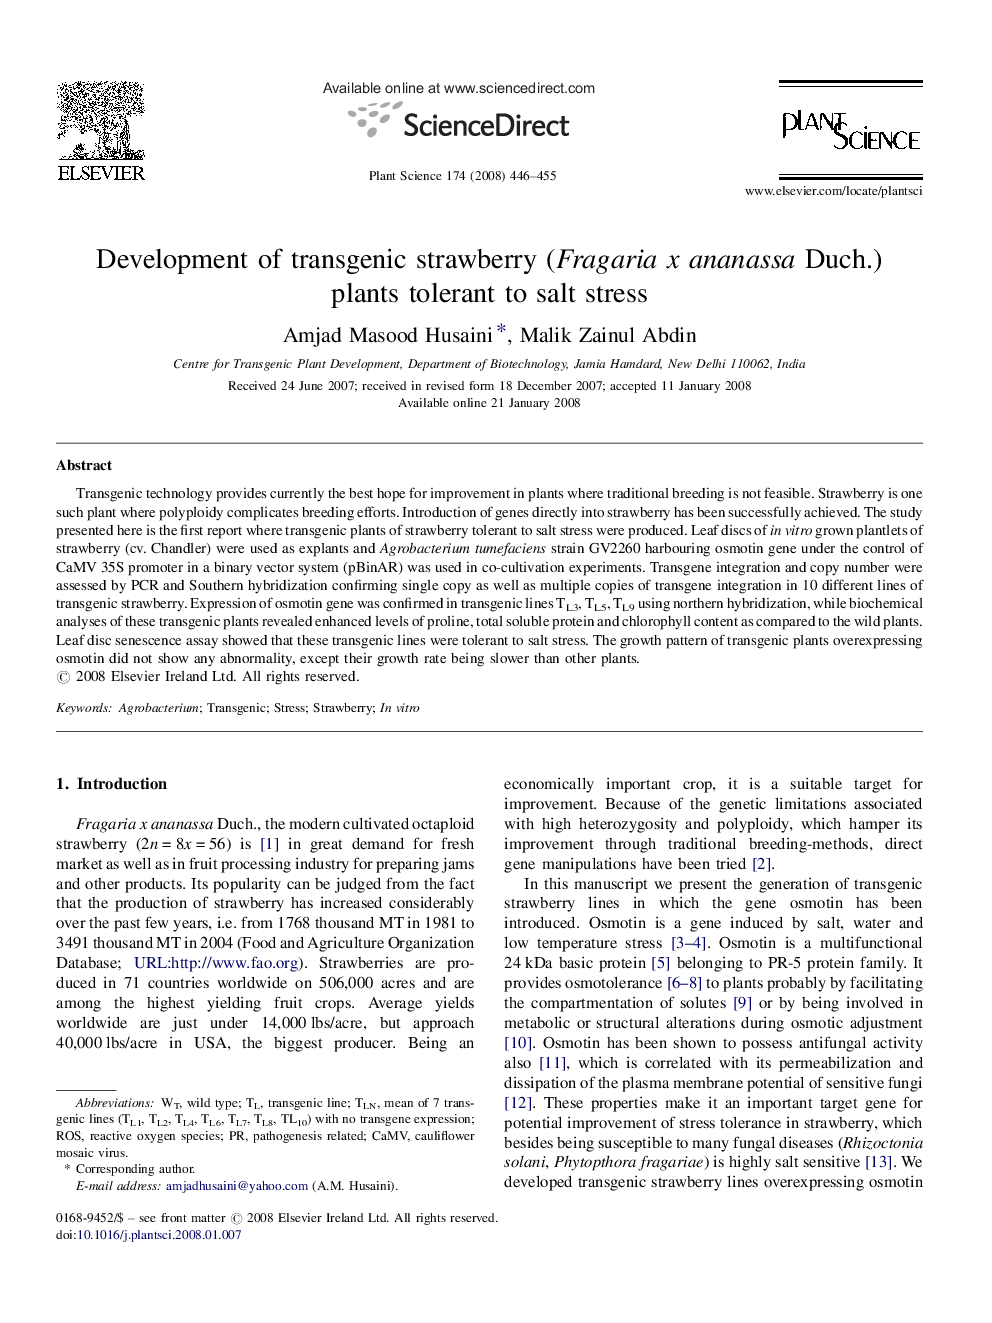 Development of transgenic strawberry (Fragaria x ananassa Duch.) plants tolerant to salt stress